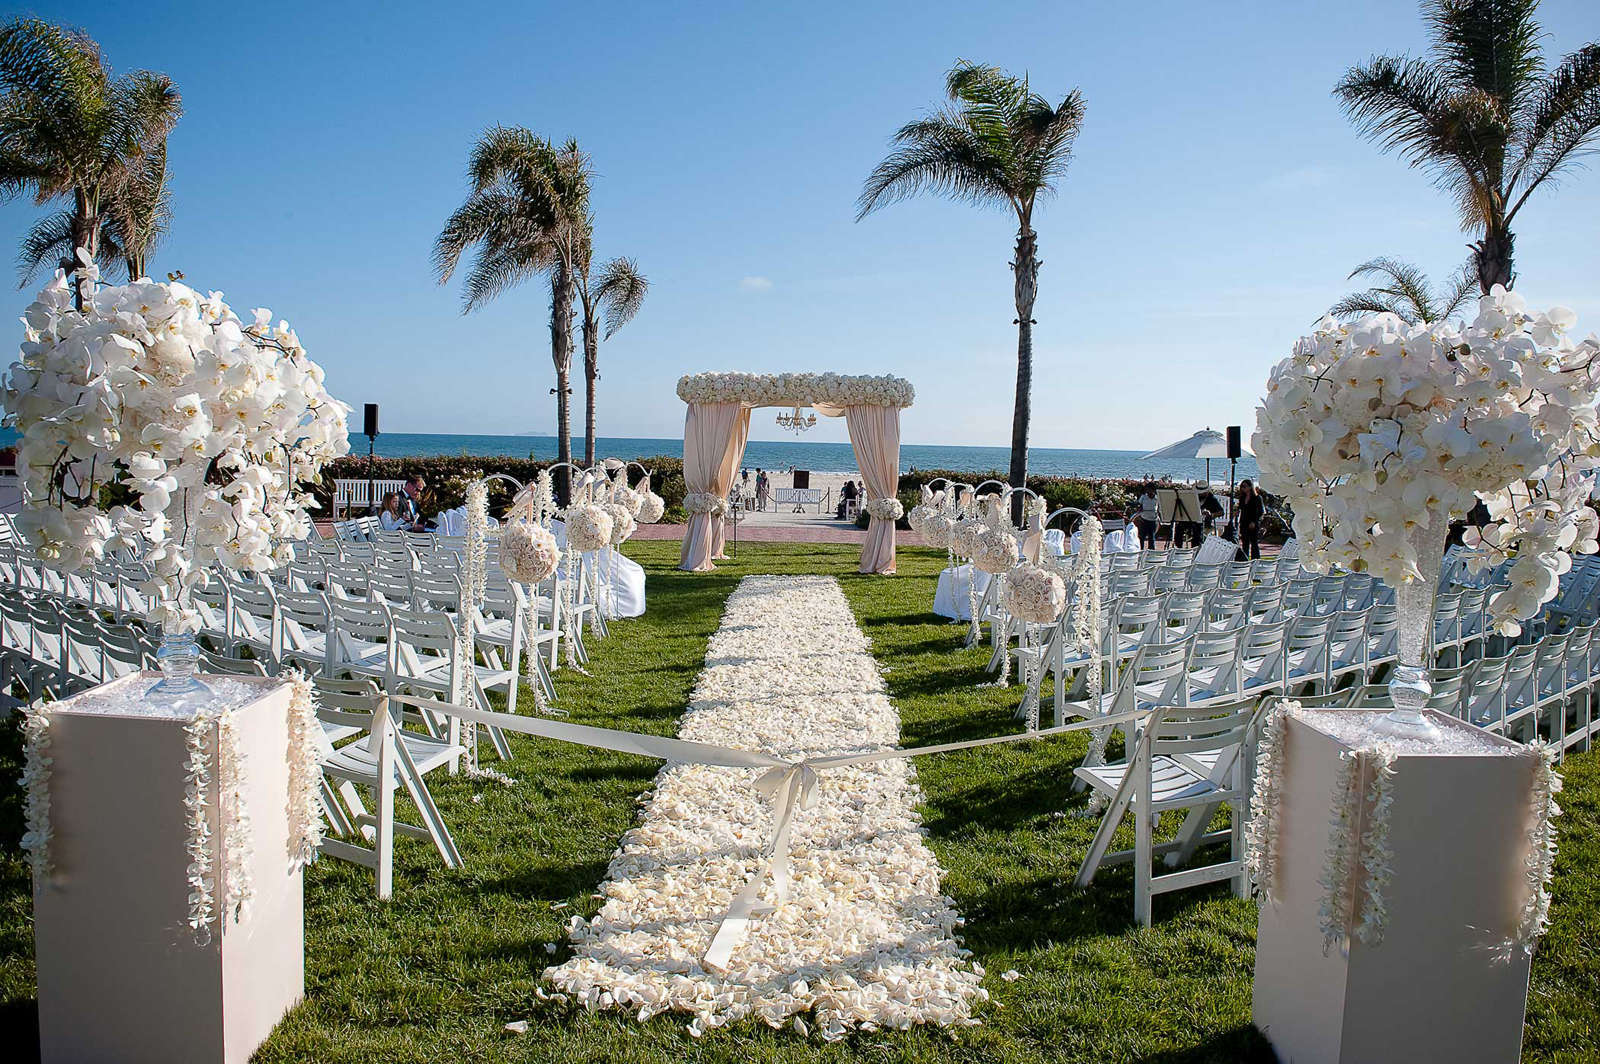 https://www.feedinspiration.com/wp-content/uploads/2015/06/outdoor-wedding-aisle-decor.jpg